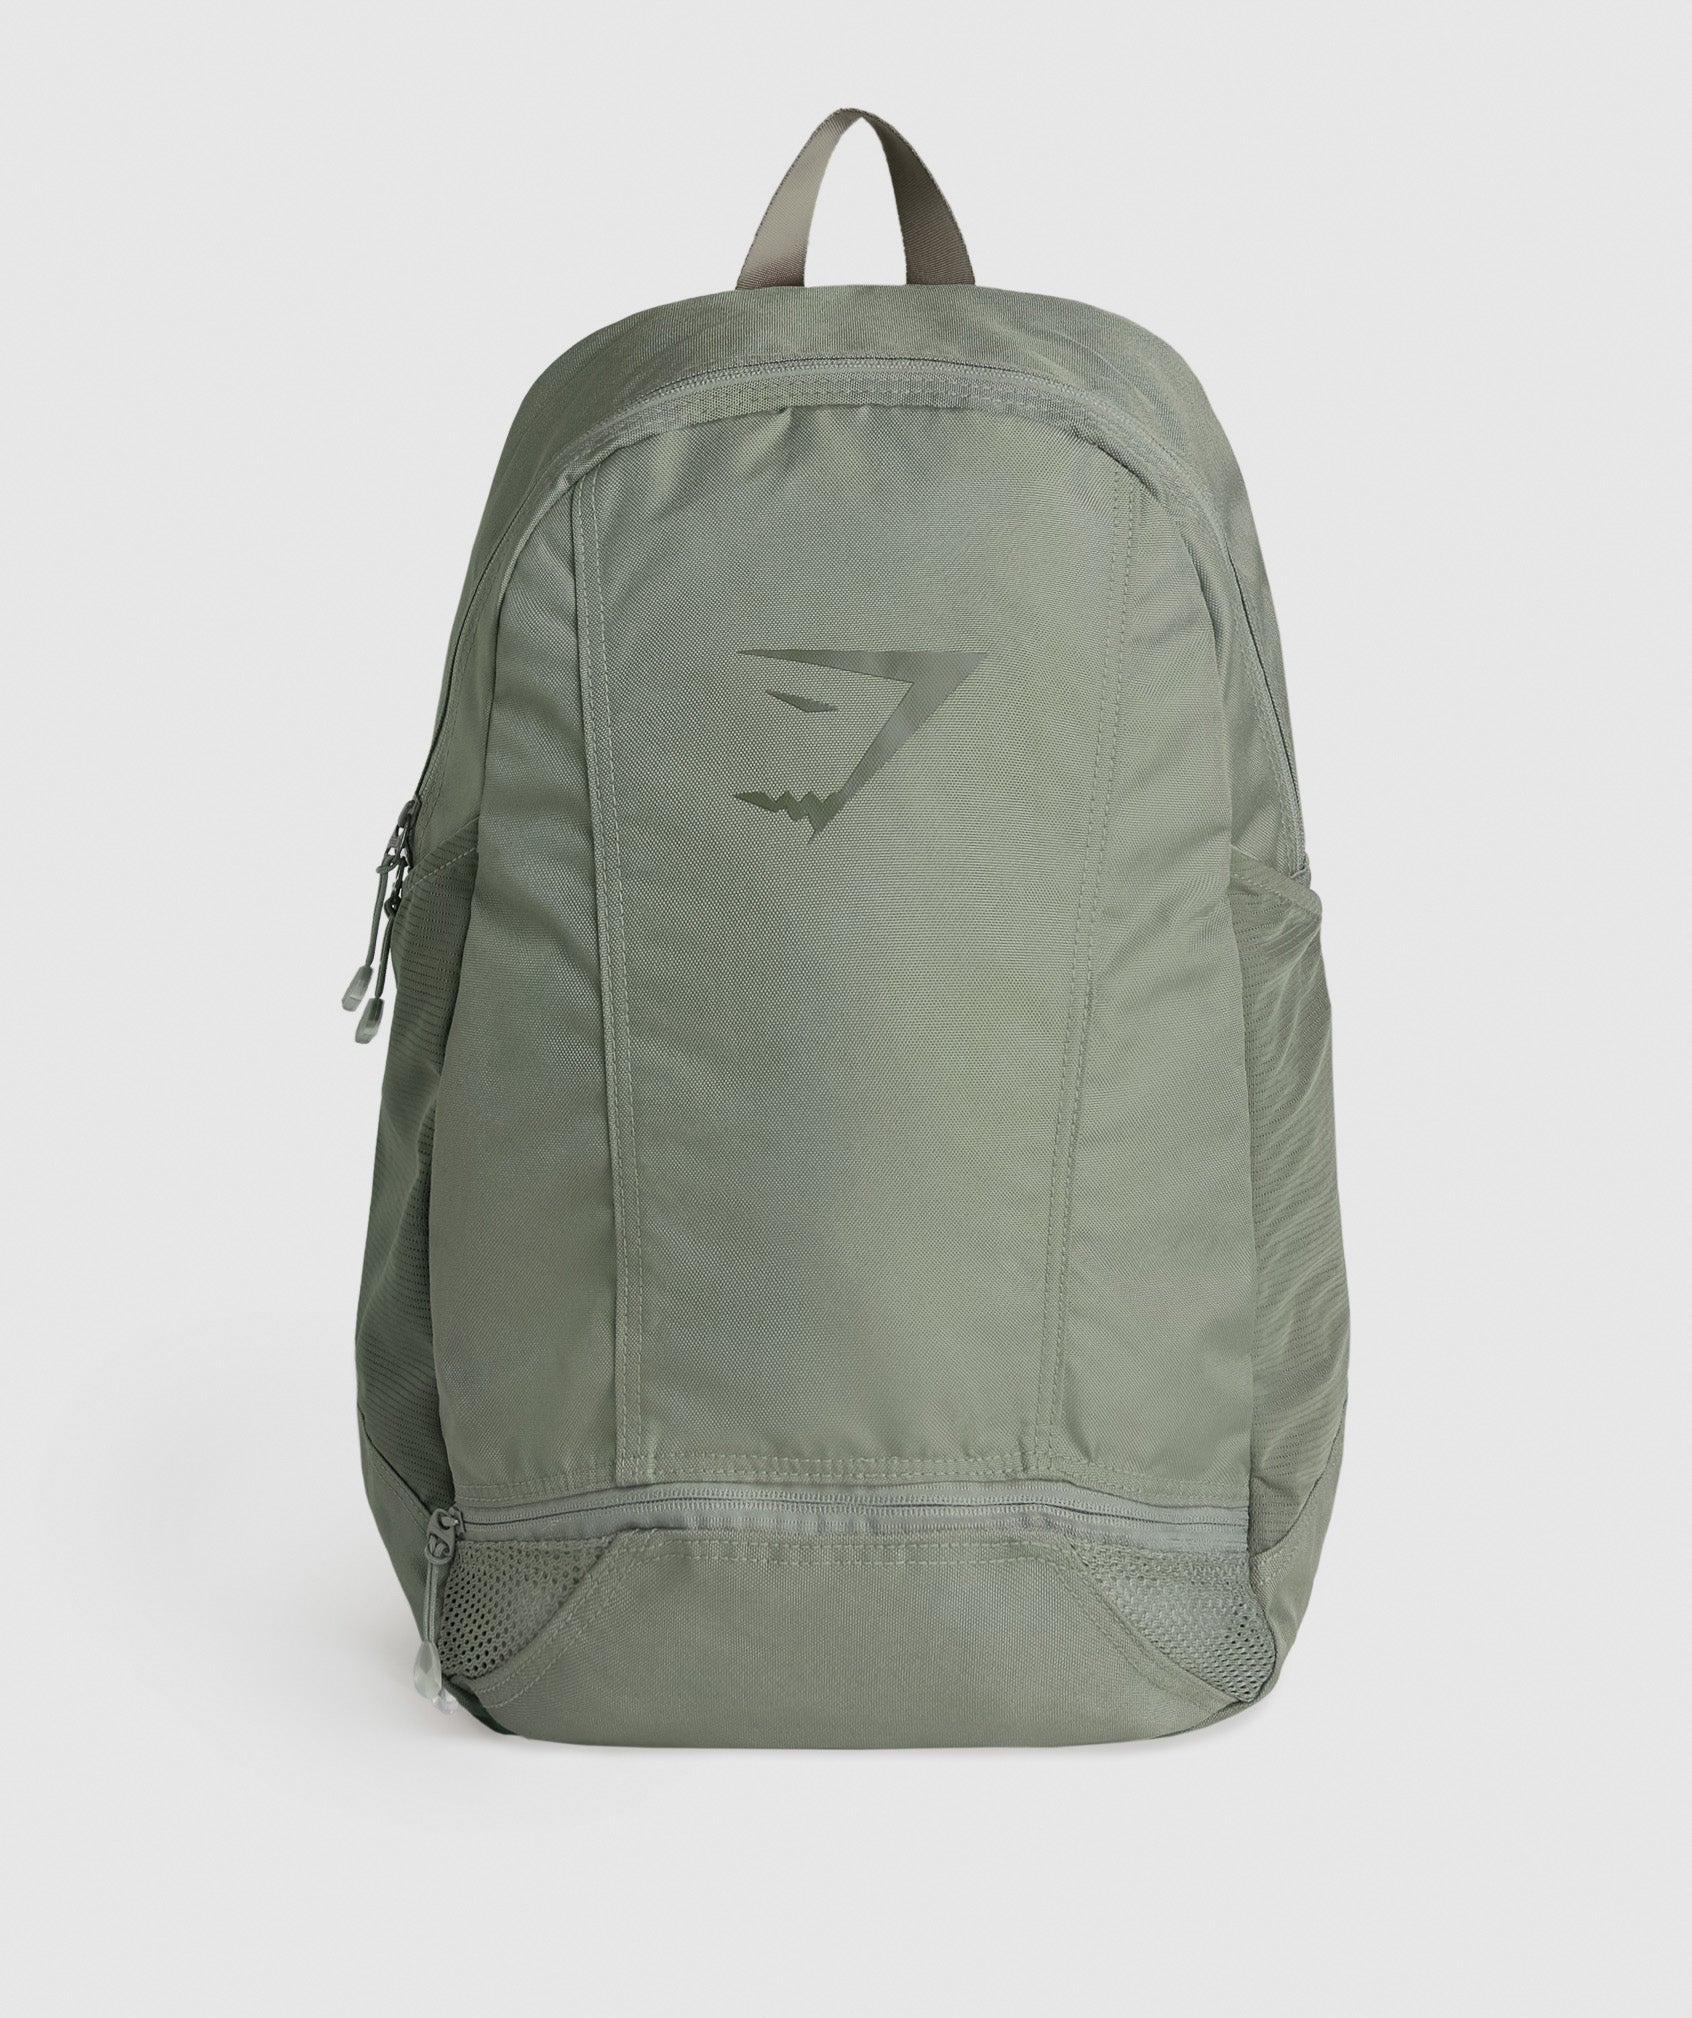 Sharkhead Backpack in Unit Green